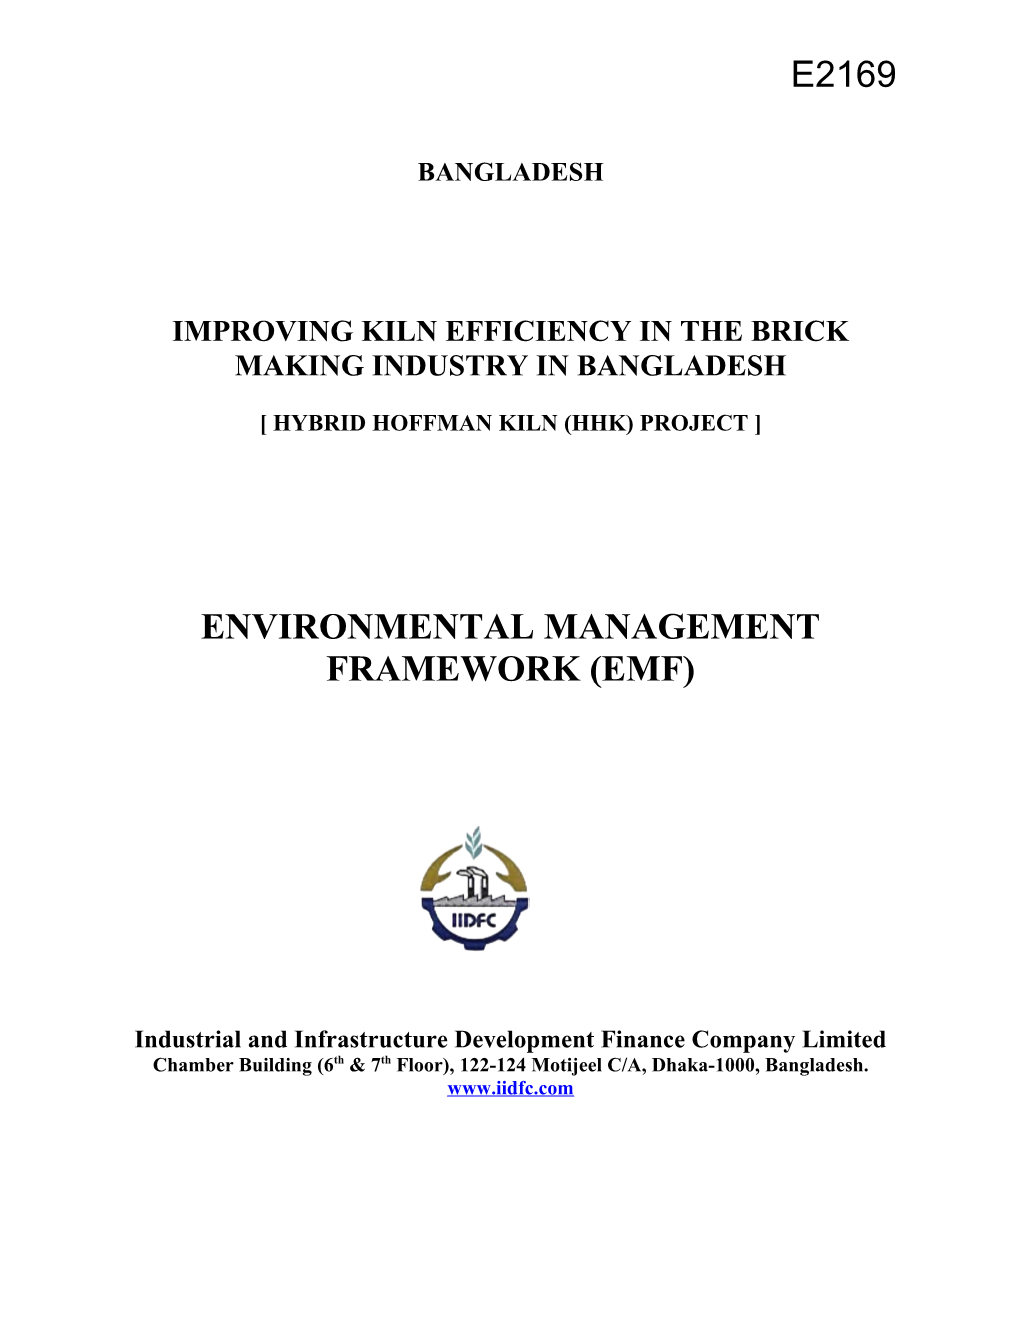 Annex V: Environment and Social Safeguards Framework